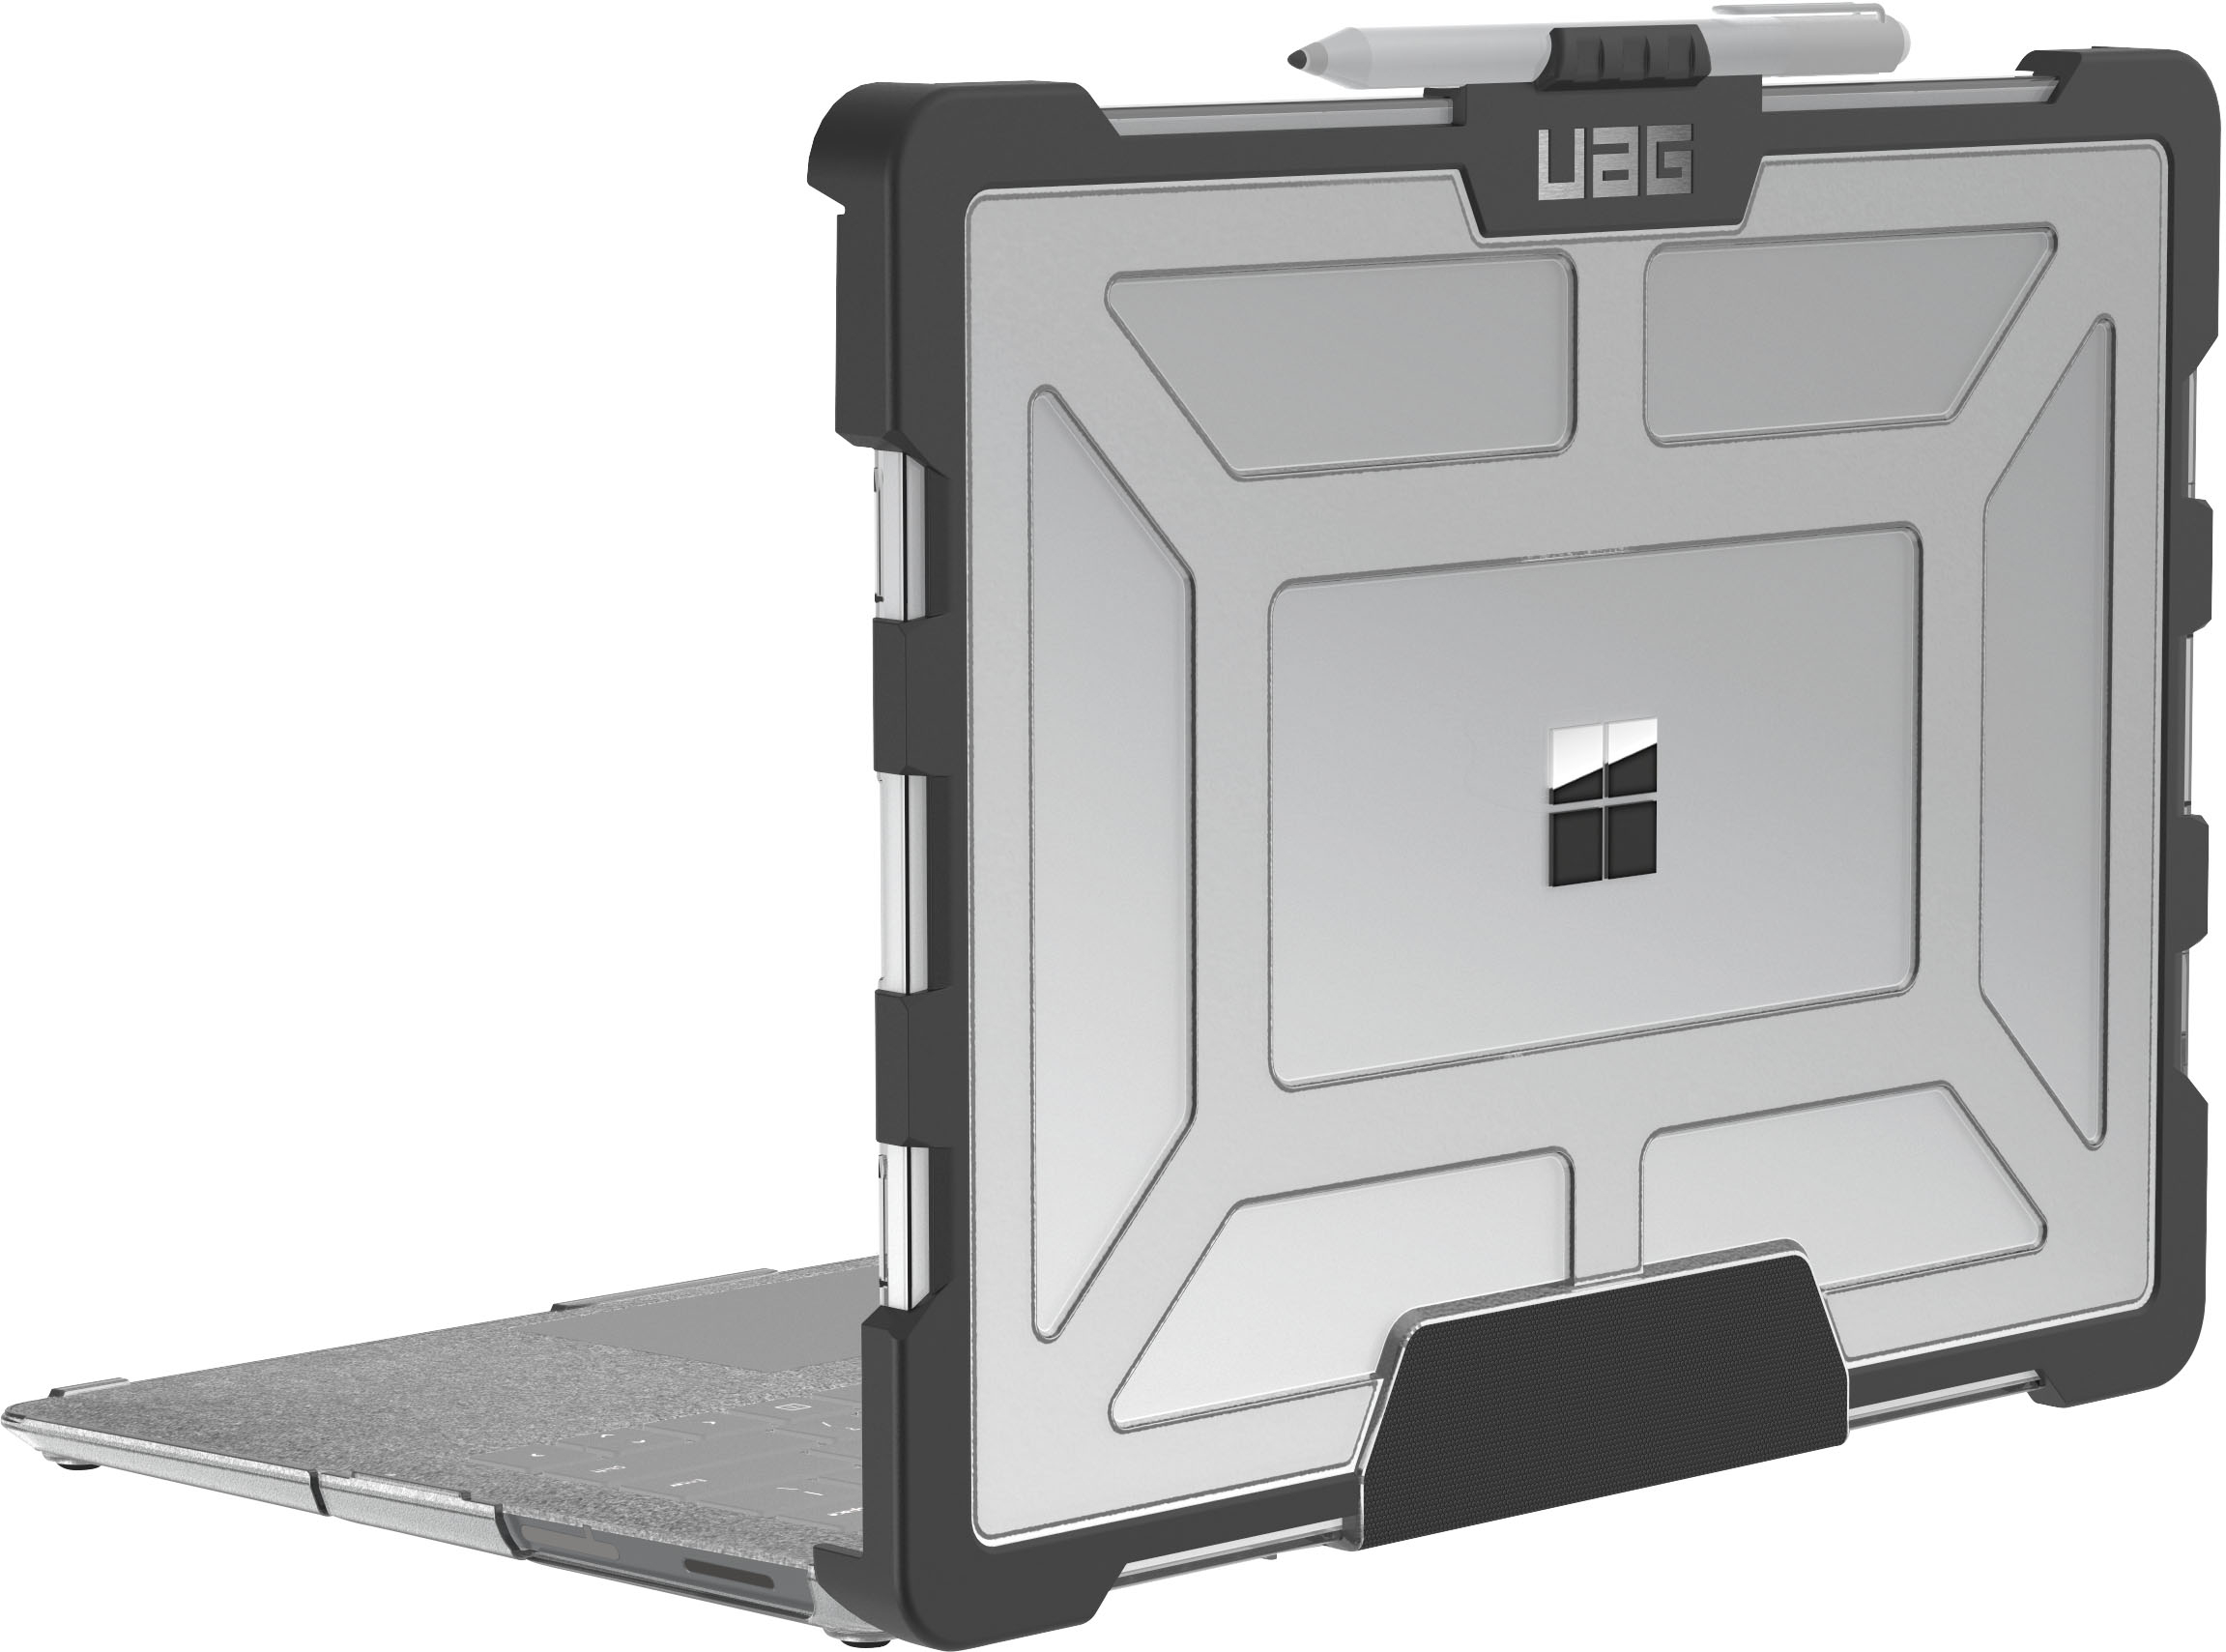 Surface Laptop Case - IT Geek – Vista Case